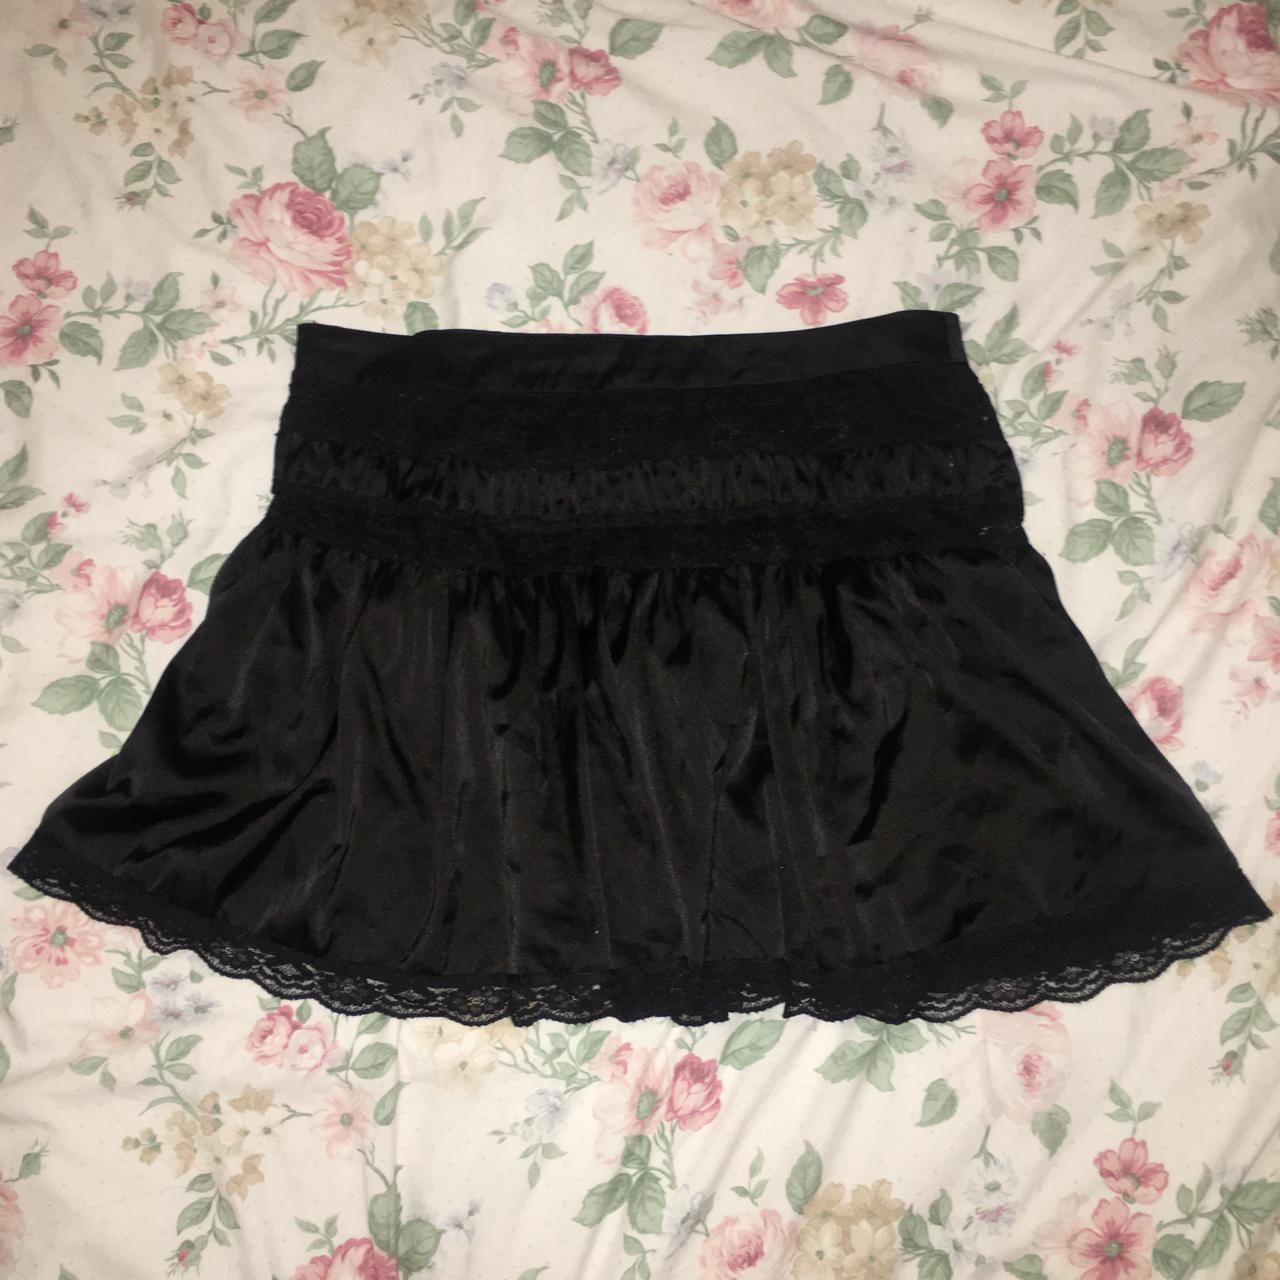 Black satin lace skirt size medium (minor flaw as... - Depop